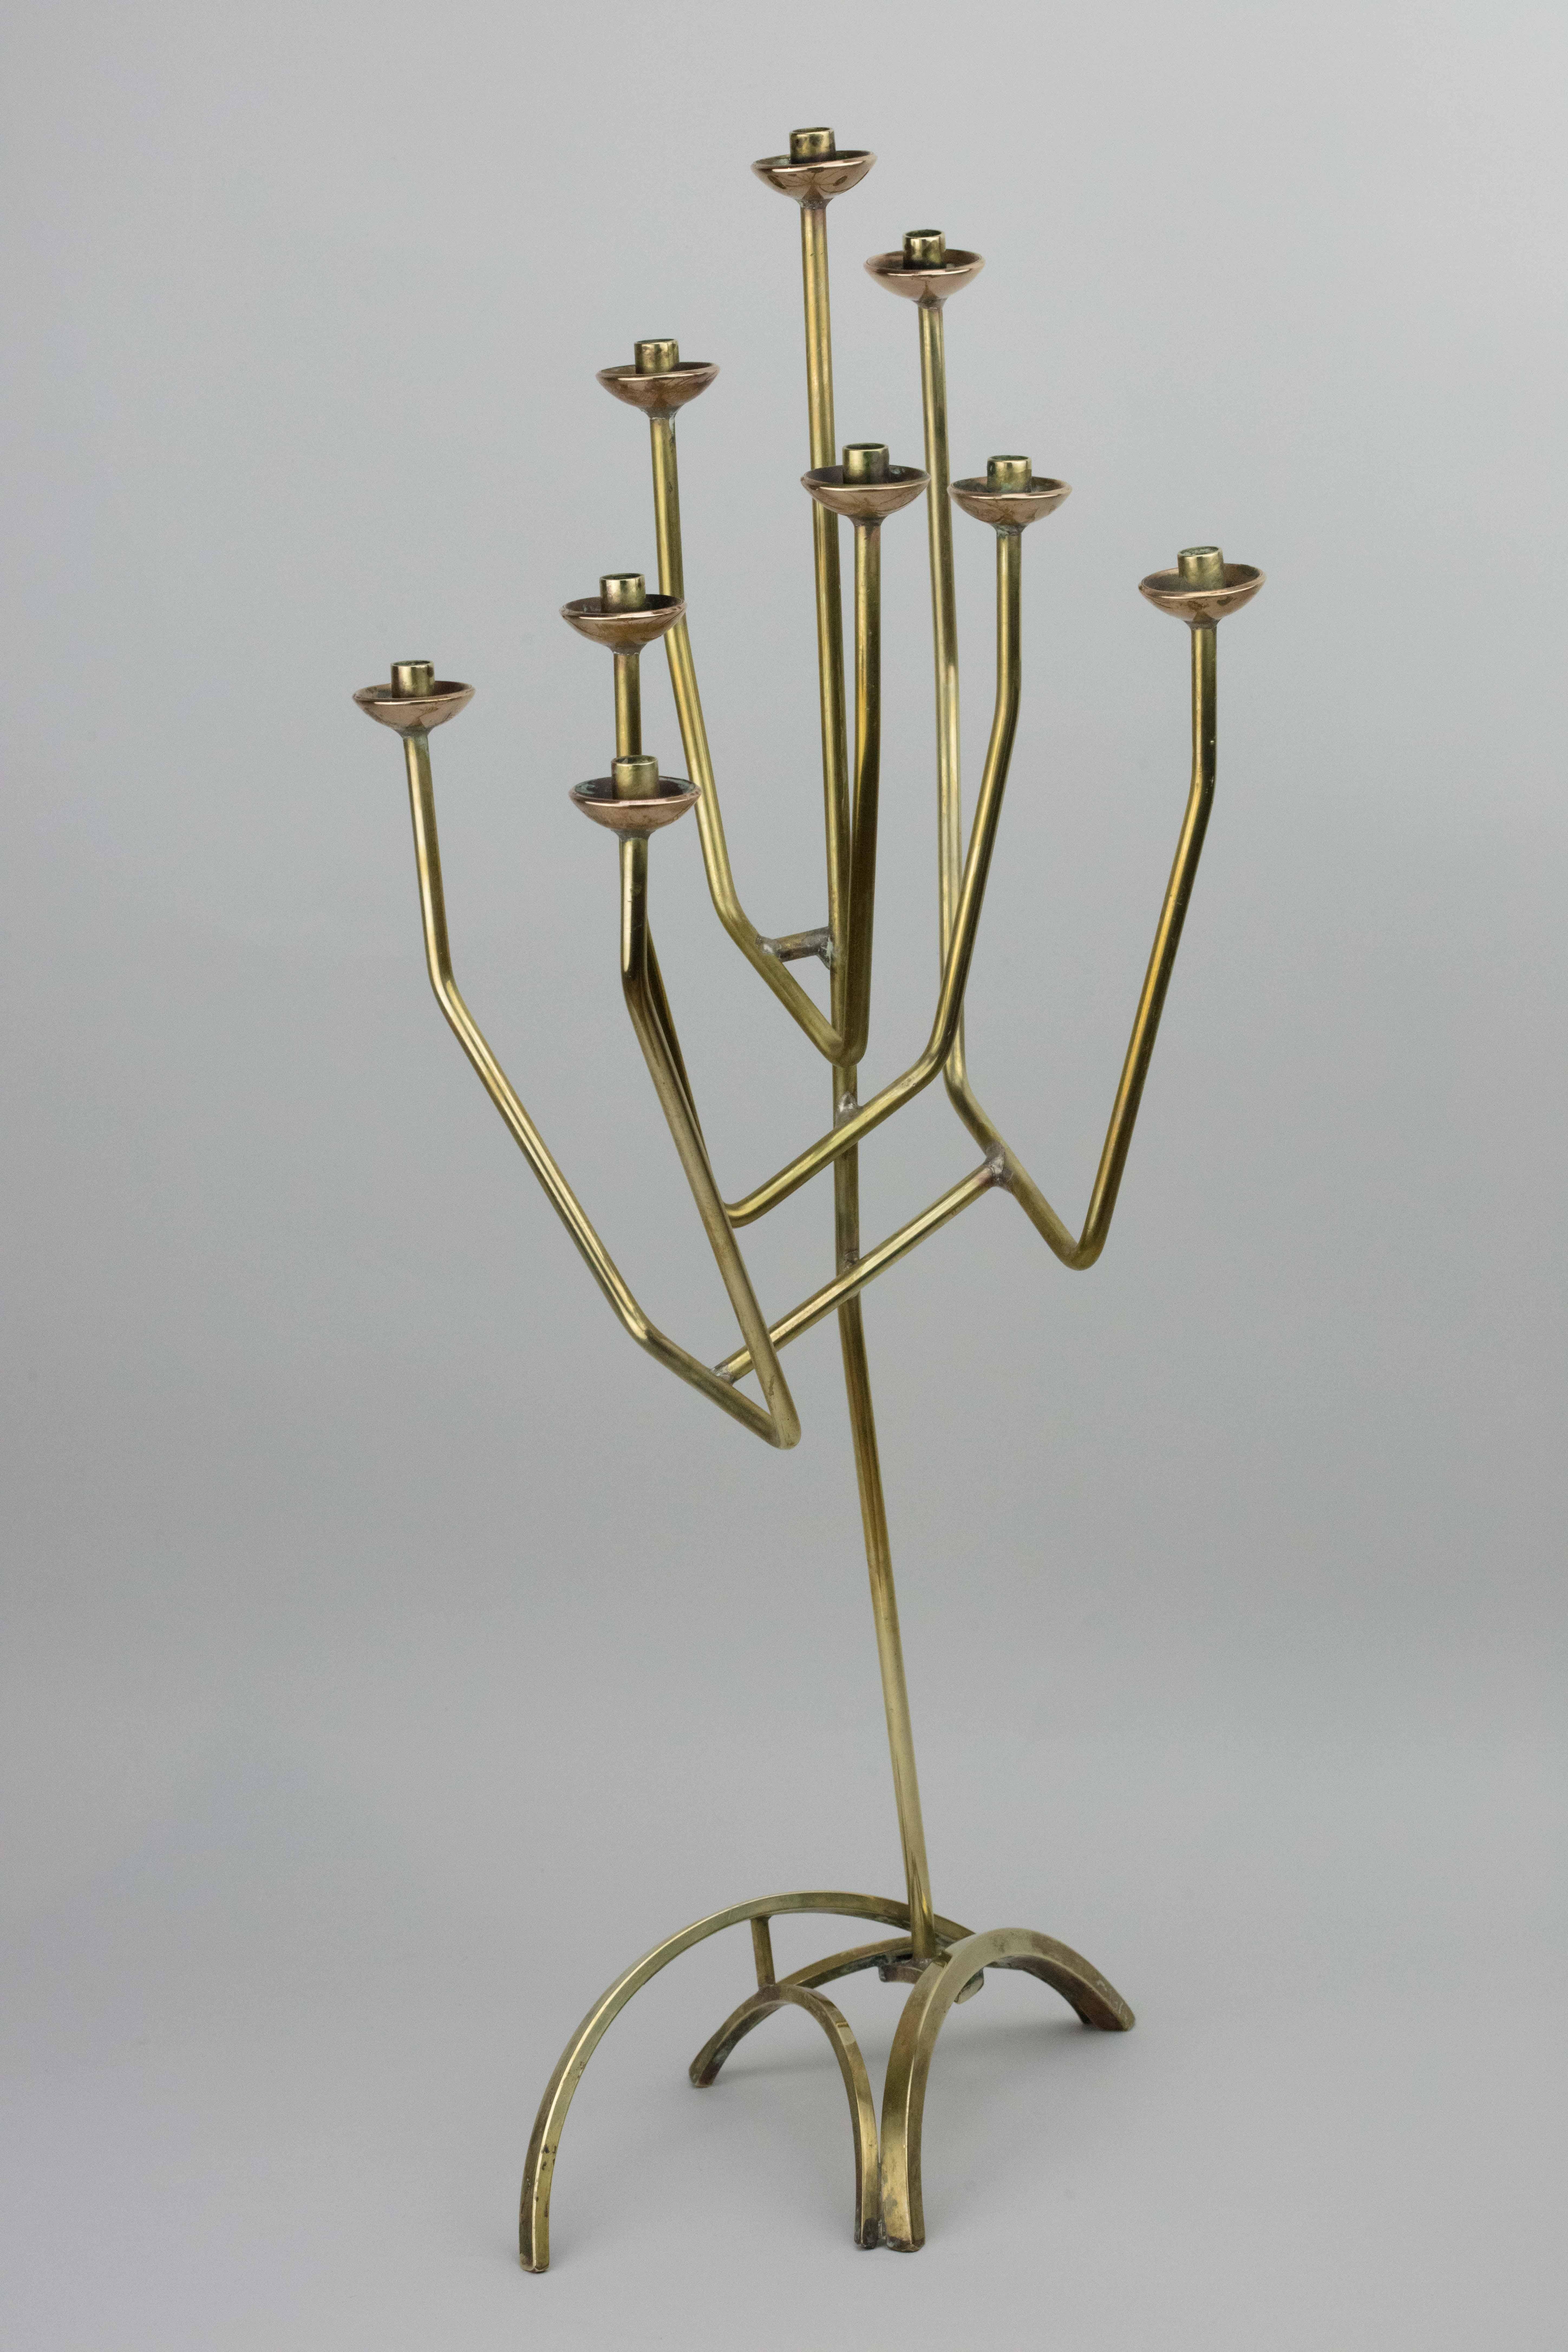 Handmade brass Hanukkah Lamp Menorah by Maxwell Chayat, USA, 1974.
Modern design, signed on the bottom: 